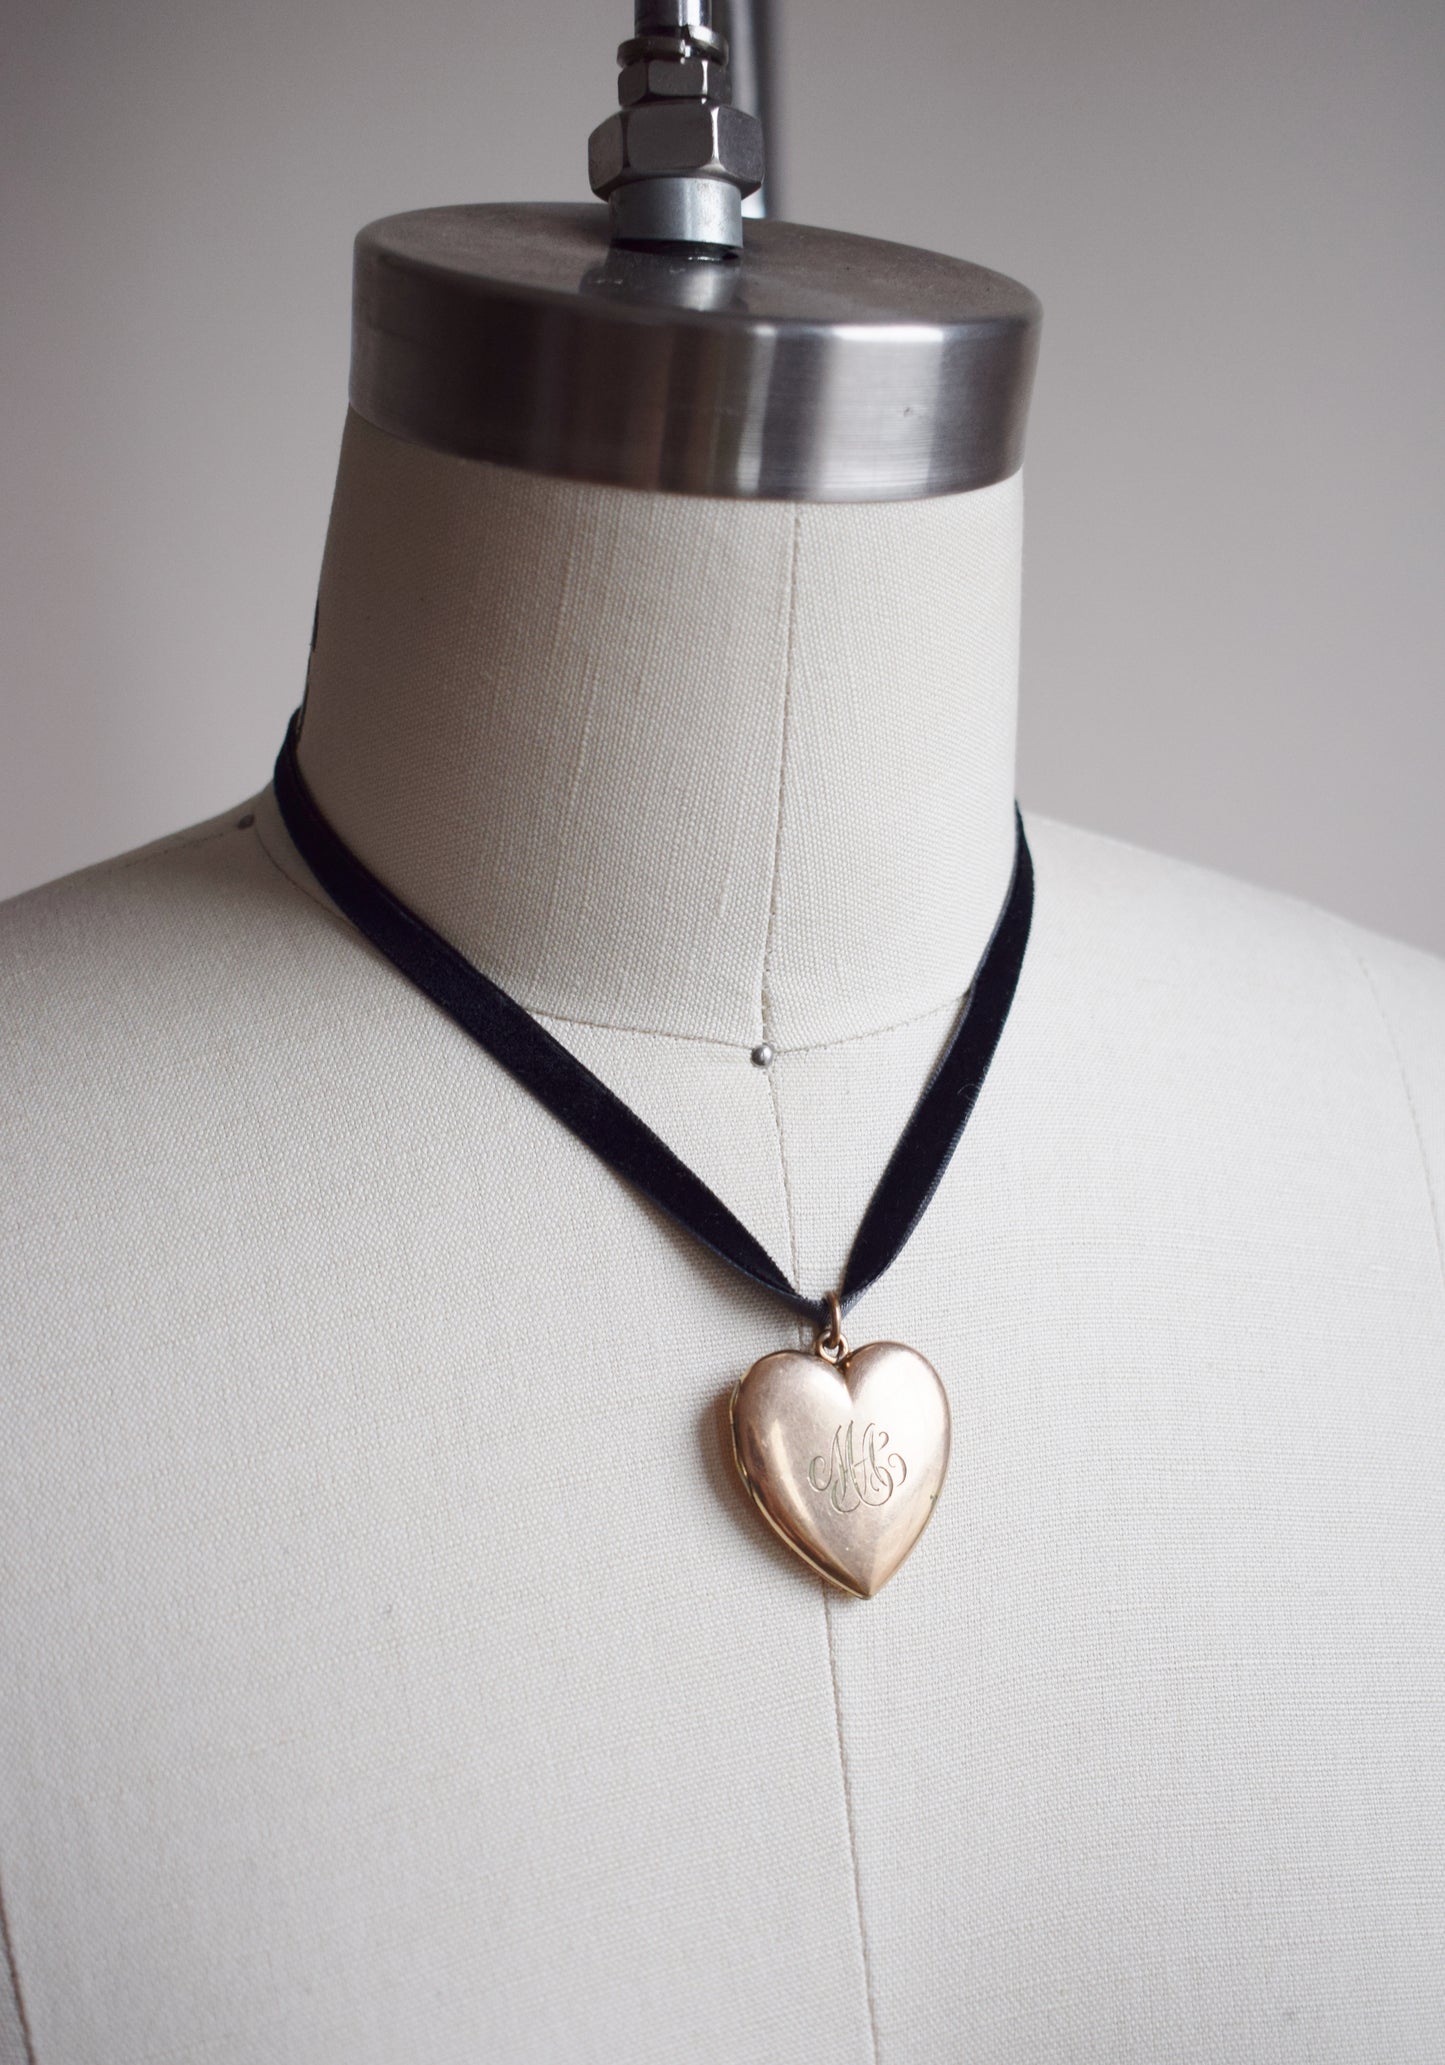 Antique Gold Heart-Shaped Locket "MA" Initials